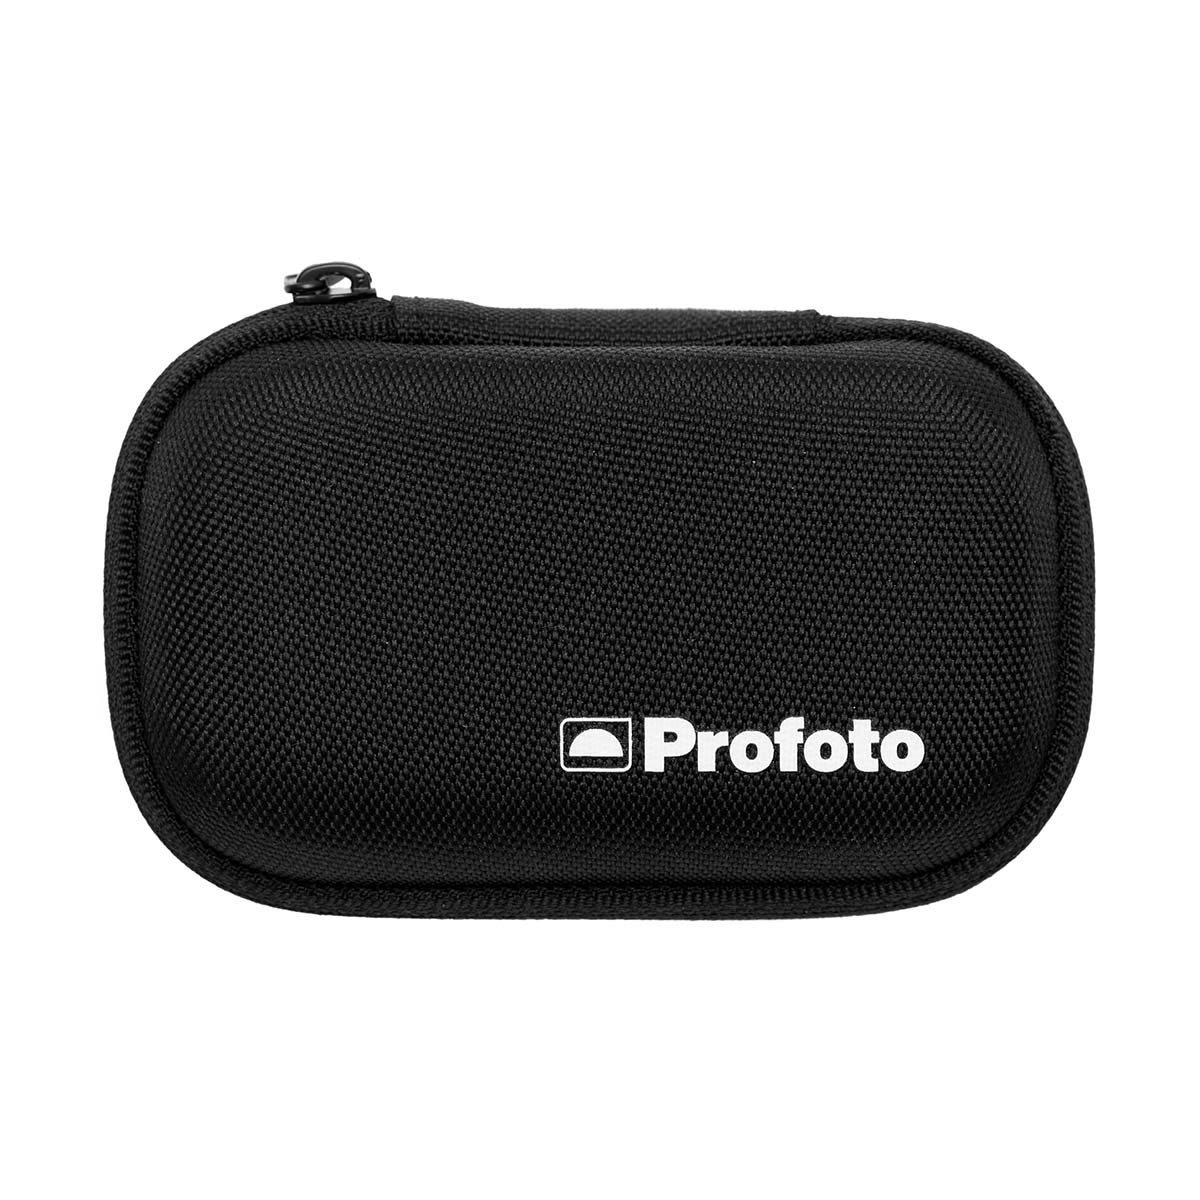 Profoto Connect Pro for Canon